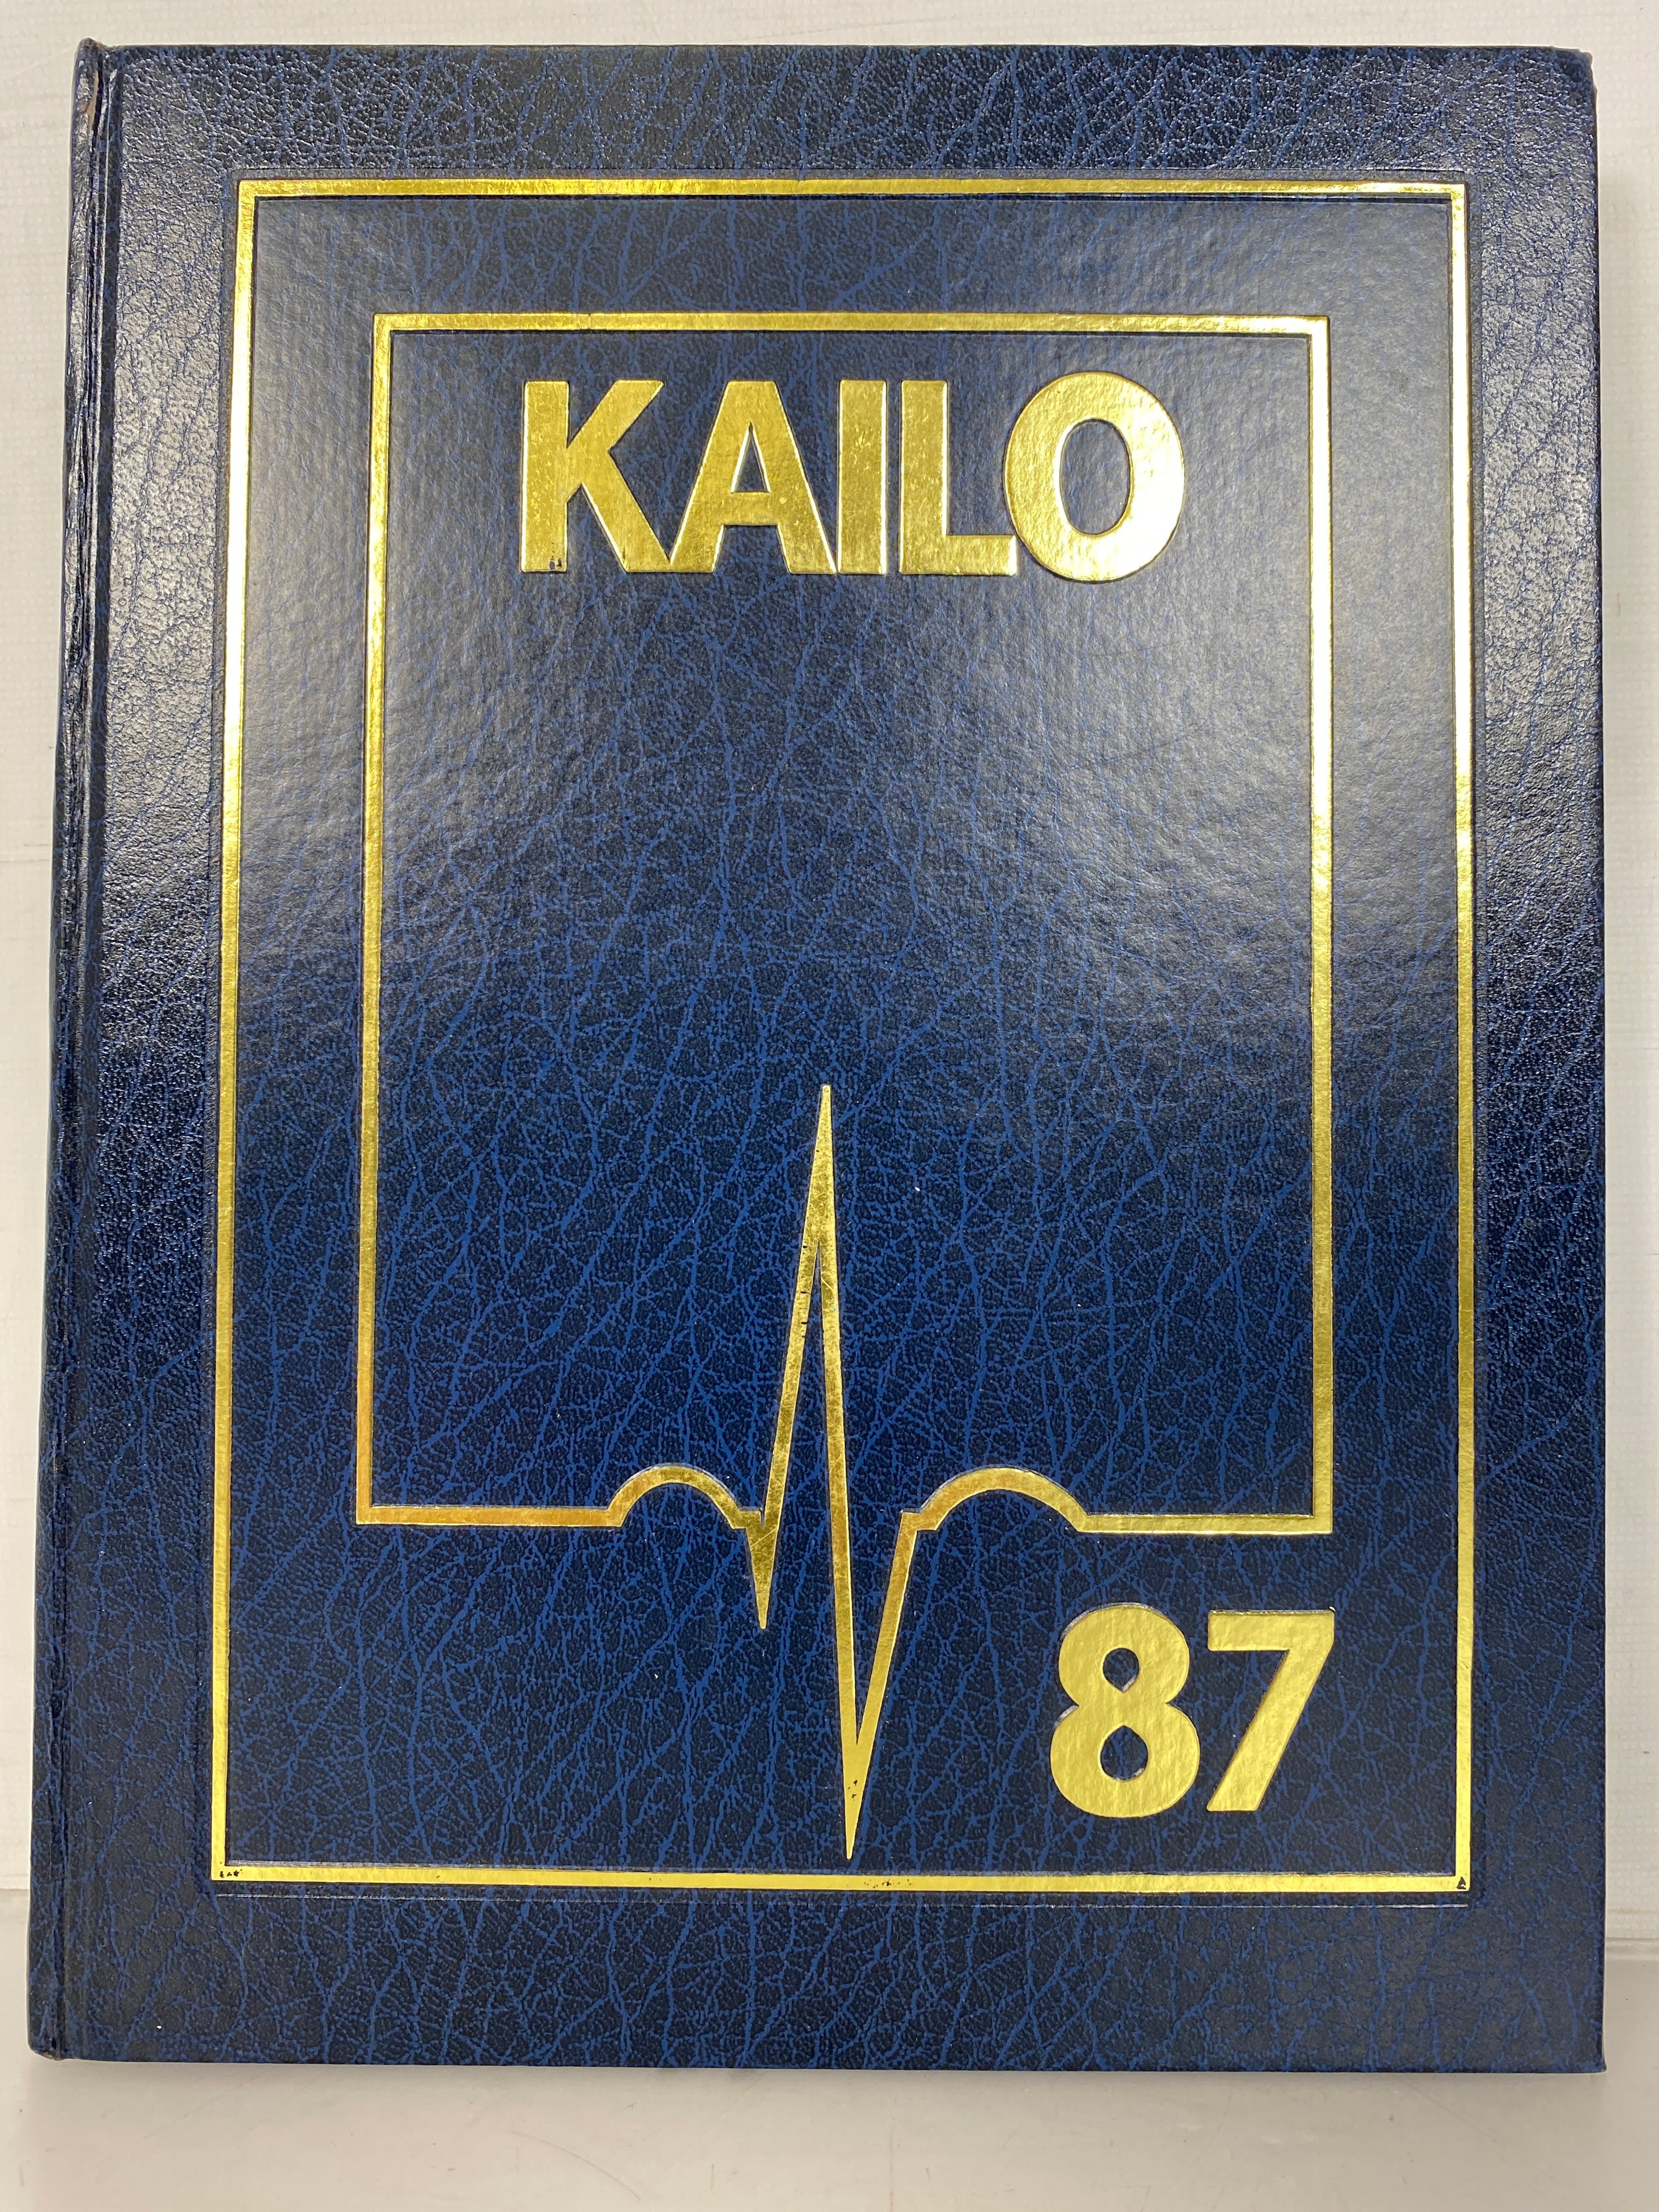 1987 New York College of Osteopathic Medicine Old Westbury New York Kailo